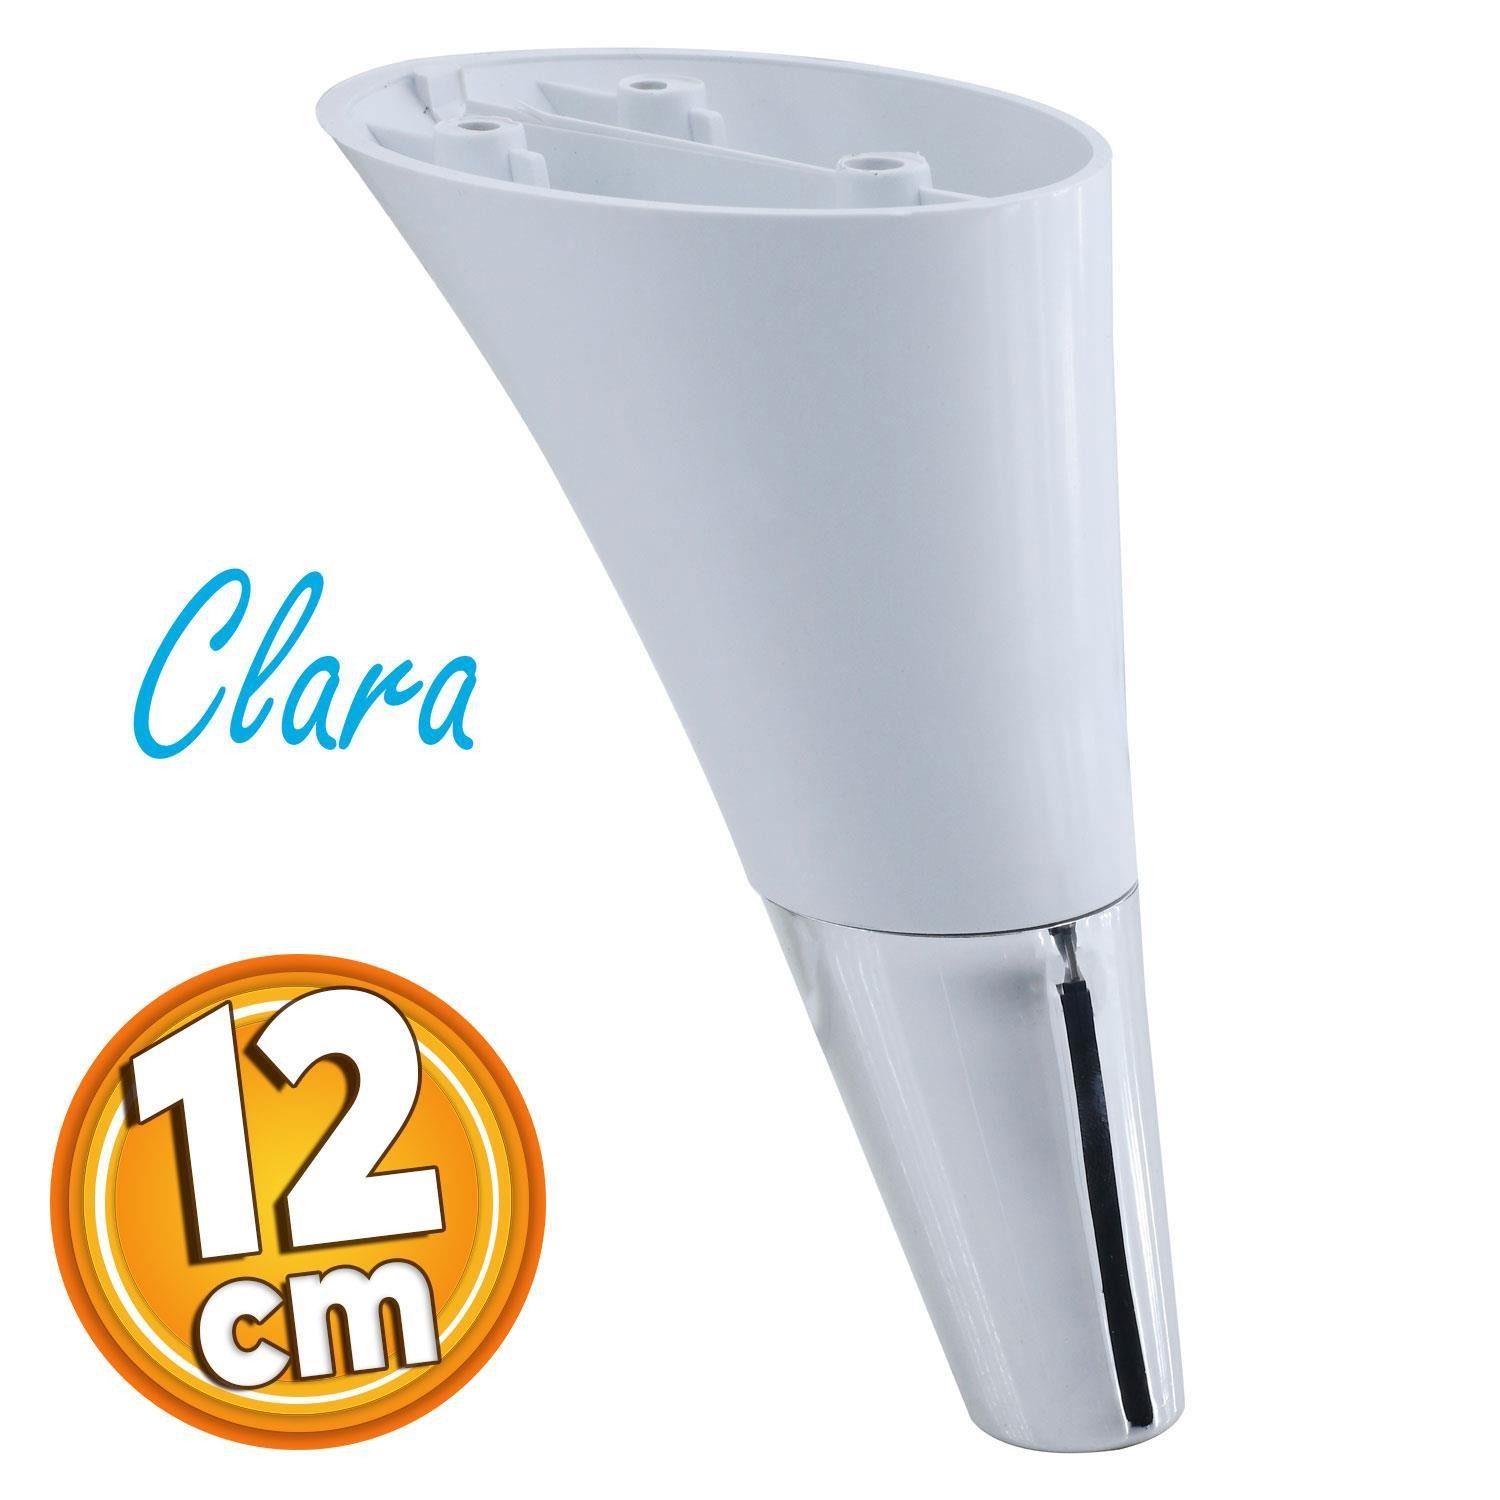 Clara Mobilya Kanepe Sehpa TV Ünitesi Baza Koltuk Ayağı Beyaz Krom Renk 12 cm (4 Adet)